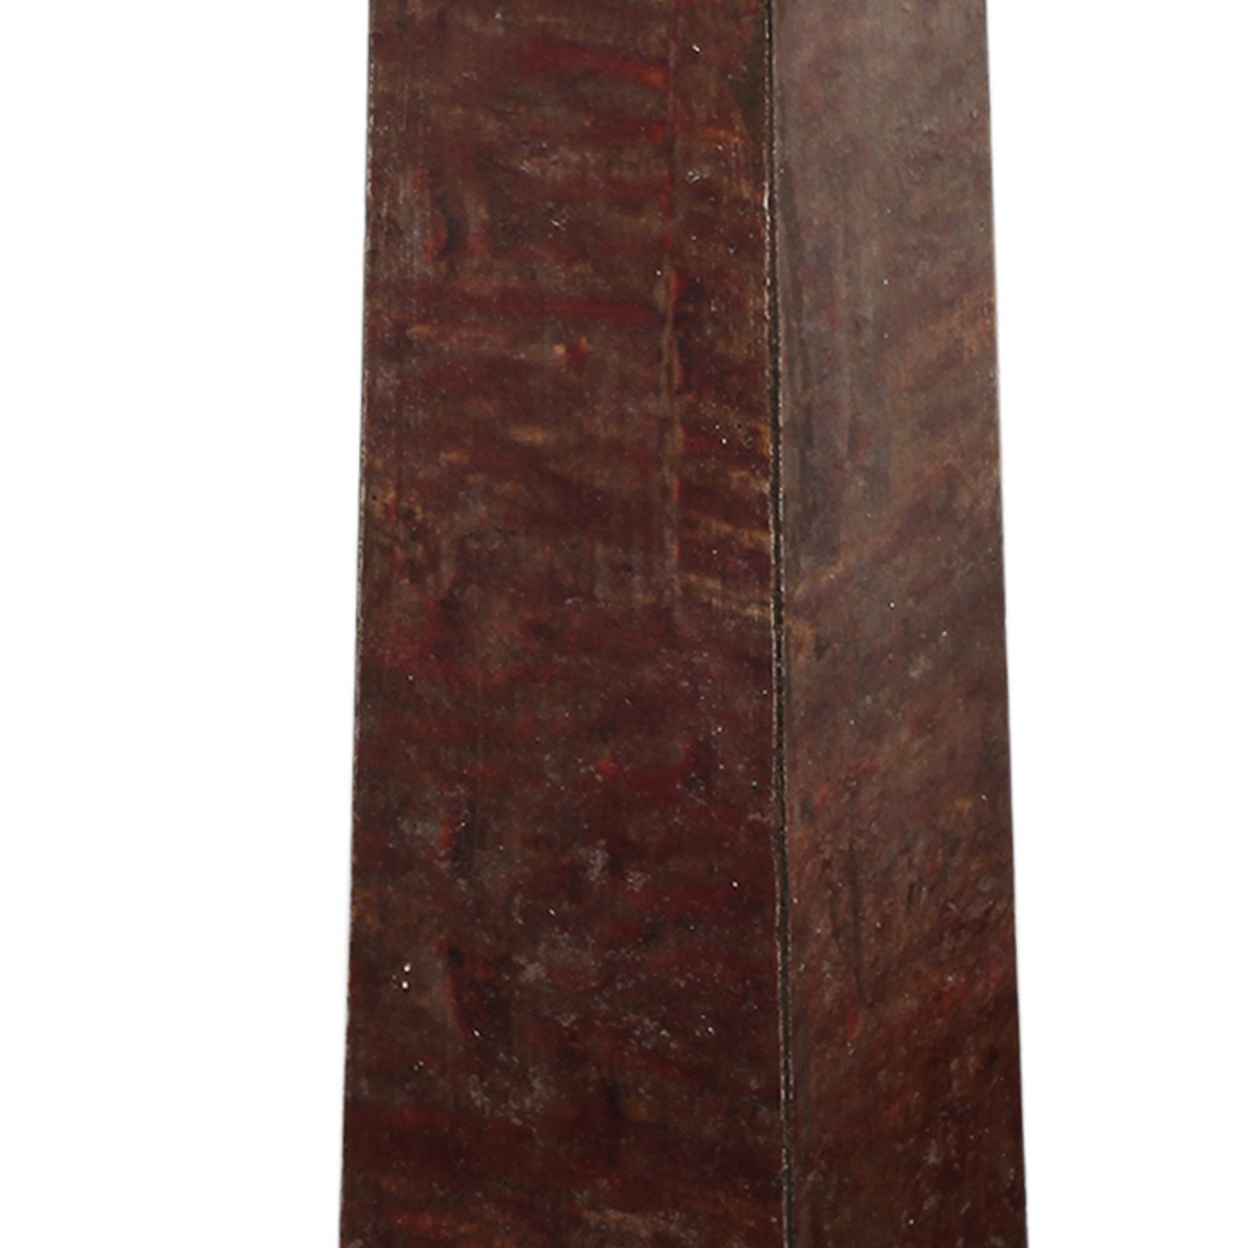 21 Inch Pillar Candle Holder, Tapered Block Pedestal, Dark Brown Wood- Saltoro Sherpi